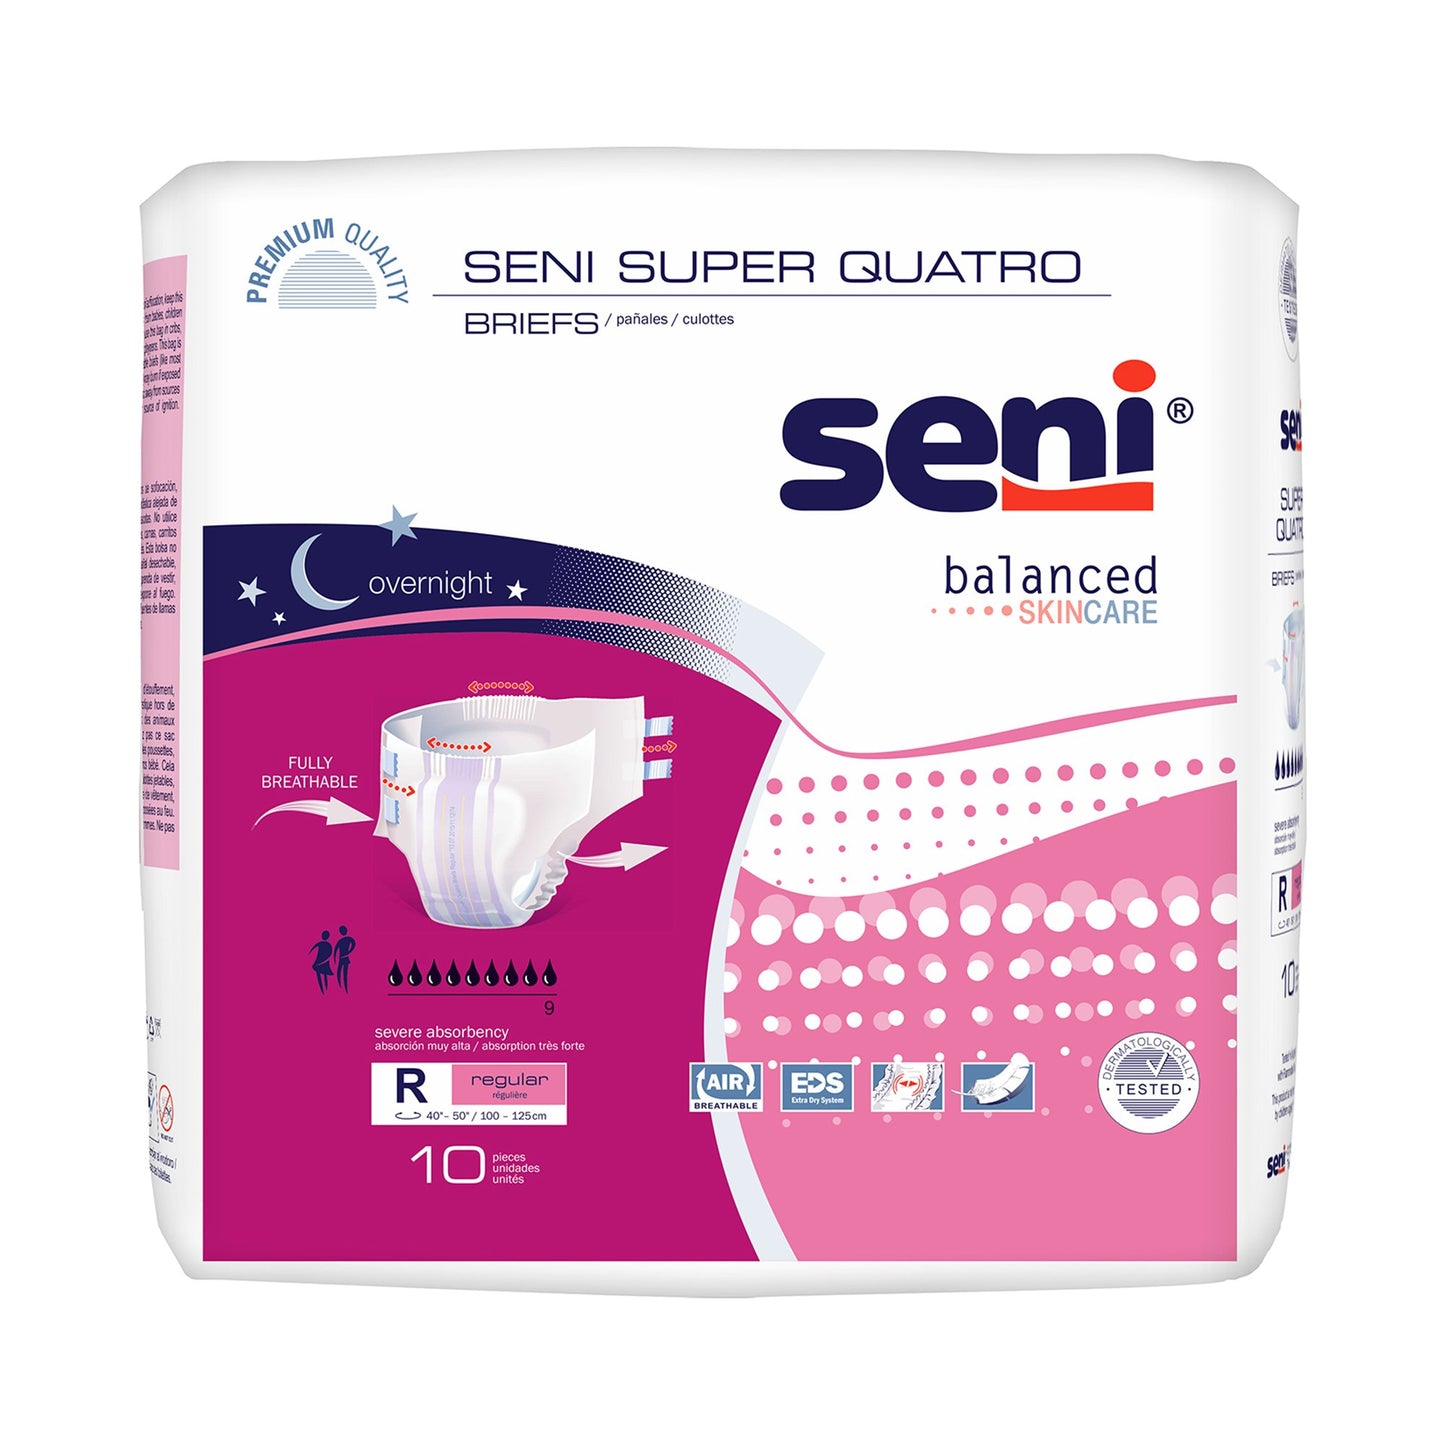 Seni® Super Quatro Severe Absorbency Incontinence Brief, Regular, 10 ct